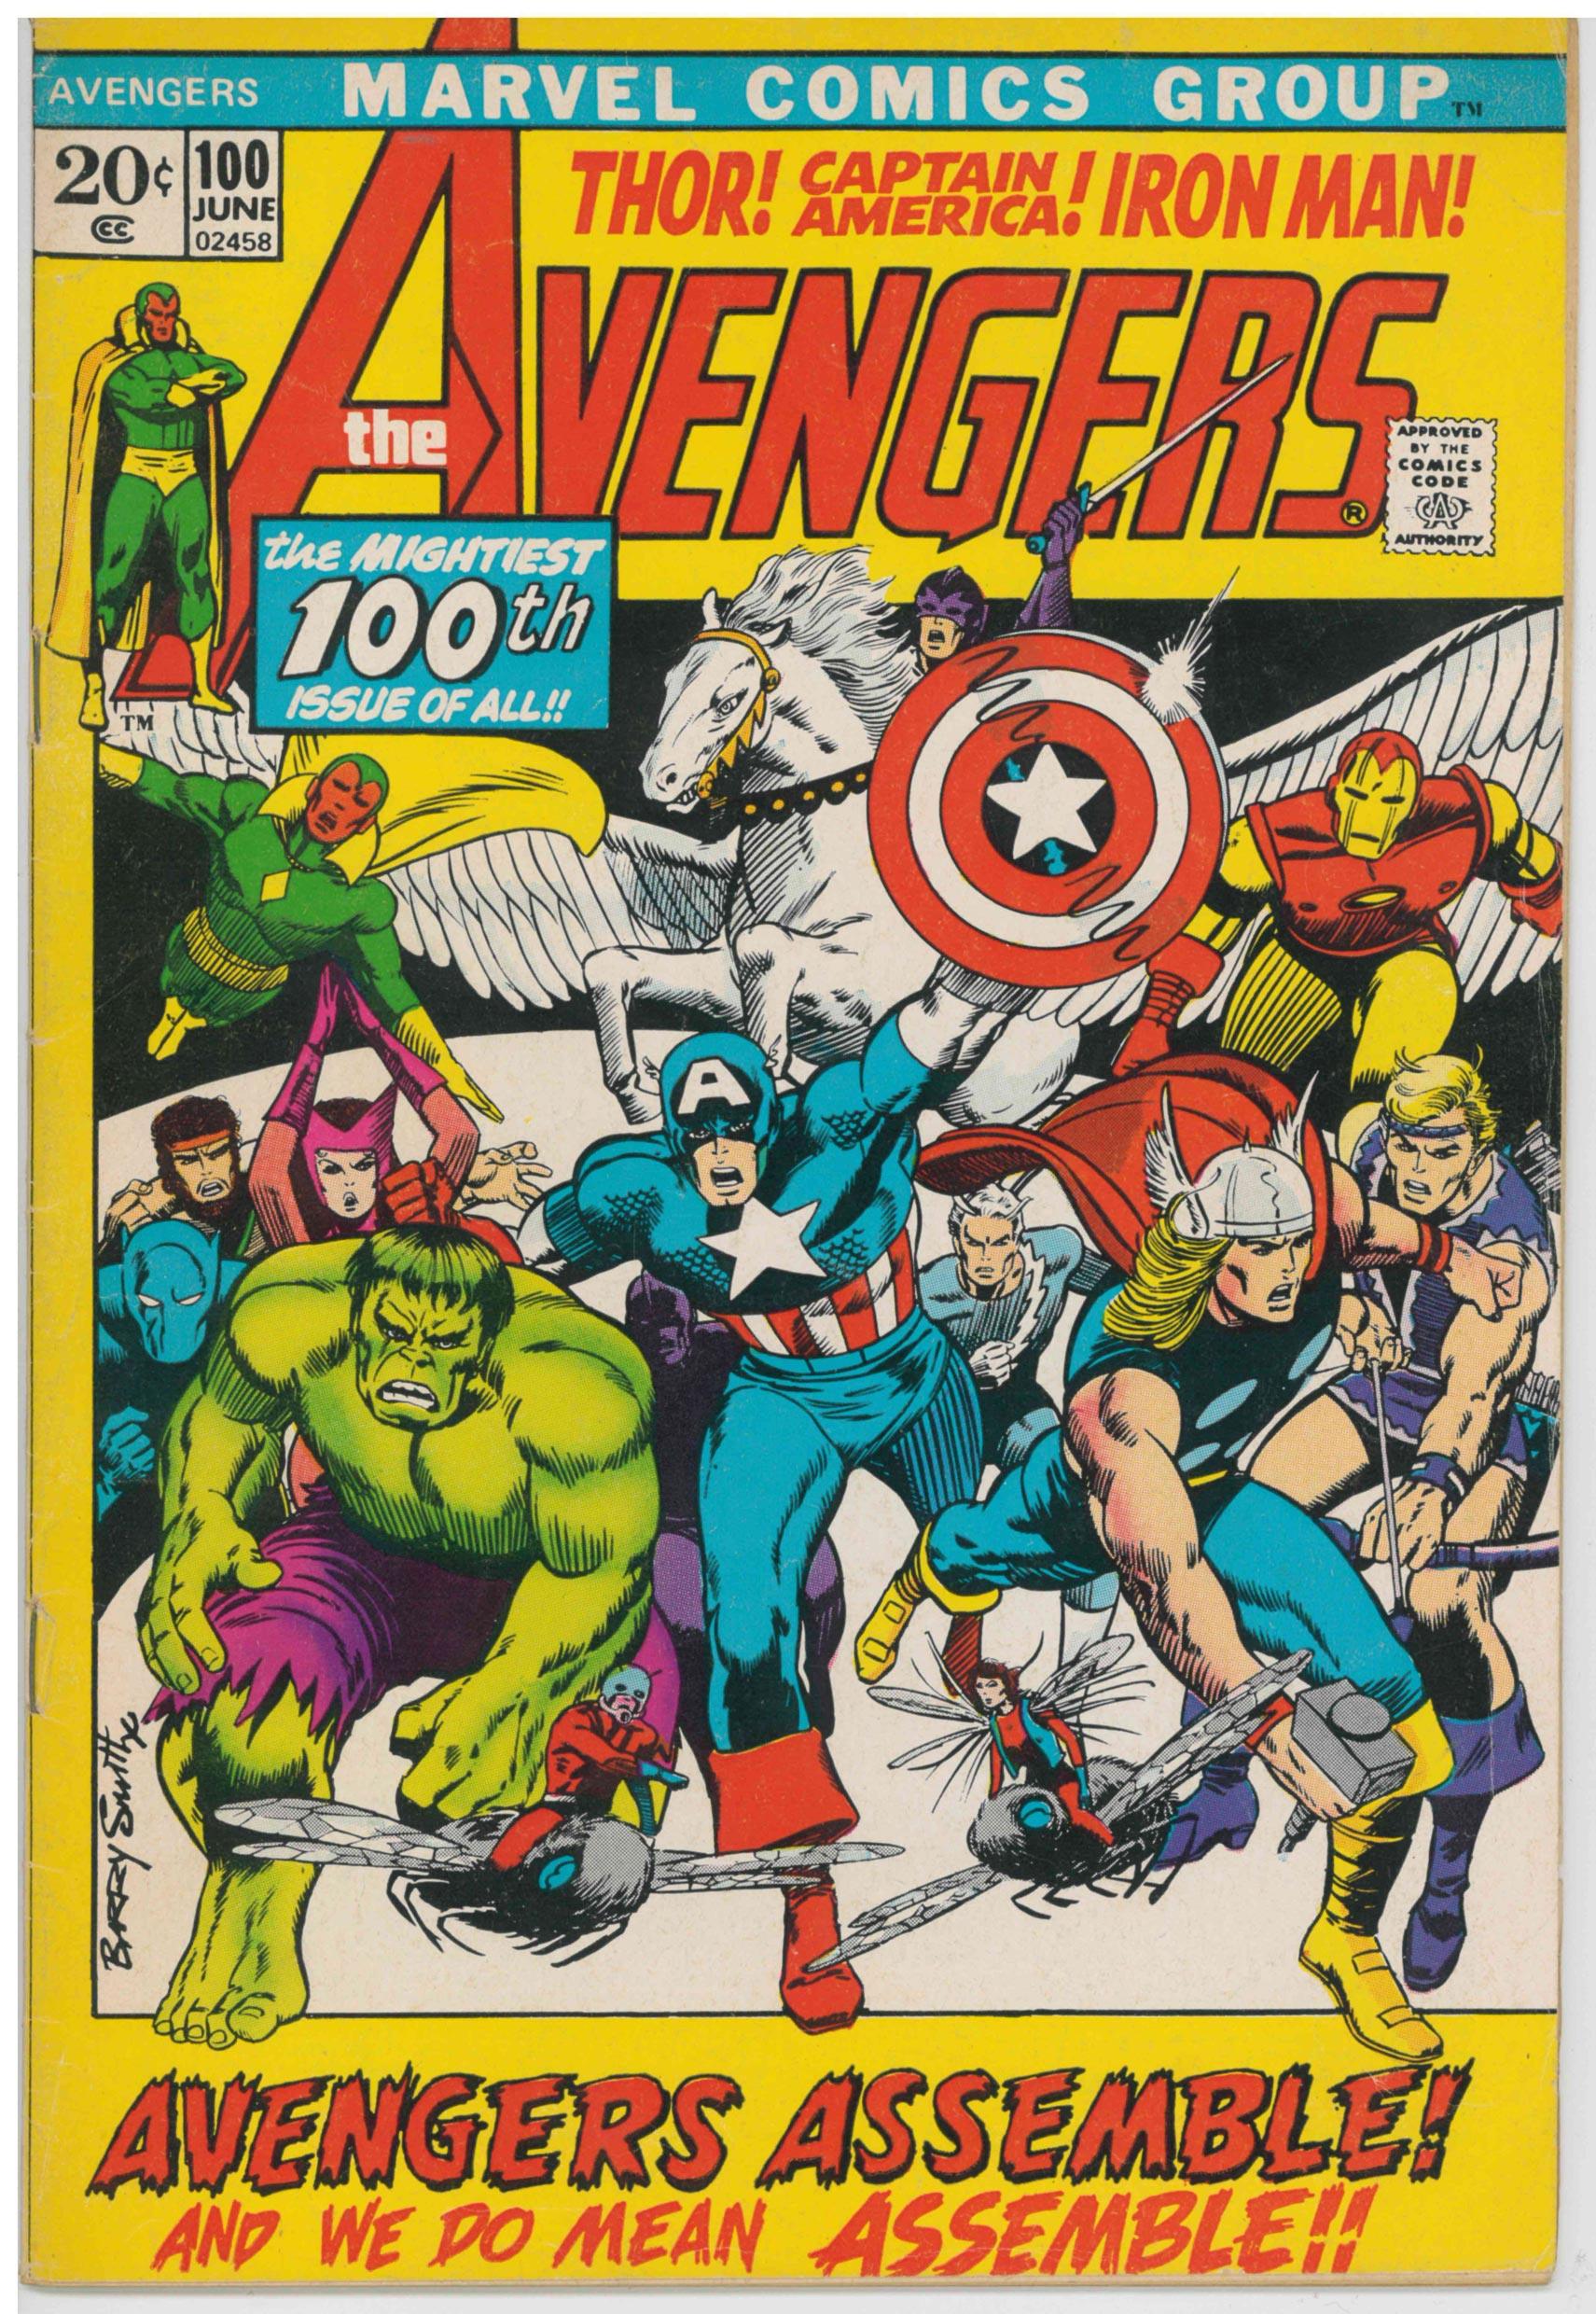 AVENGERS (1963) #100 (FN/VF) - Kings Comics